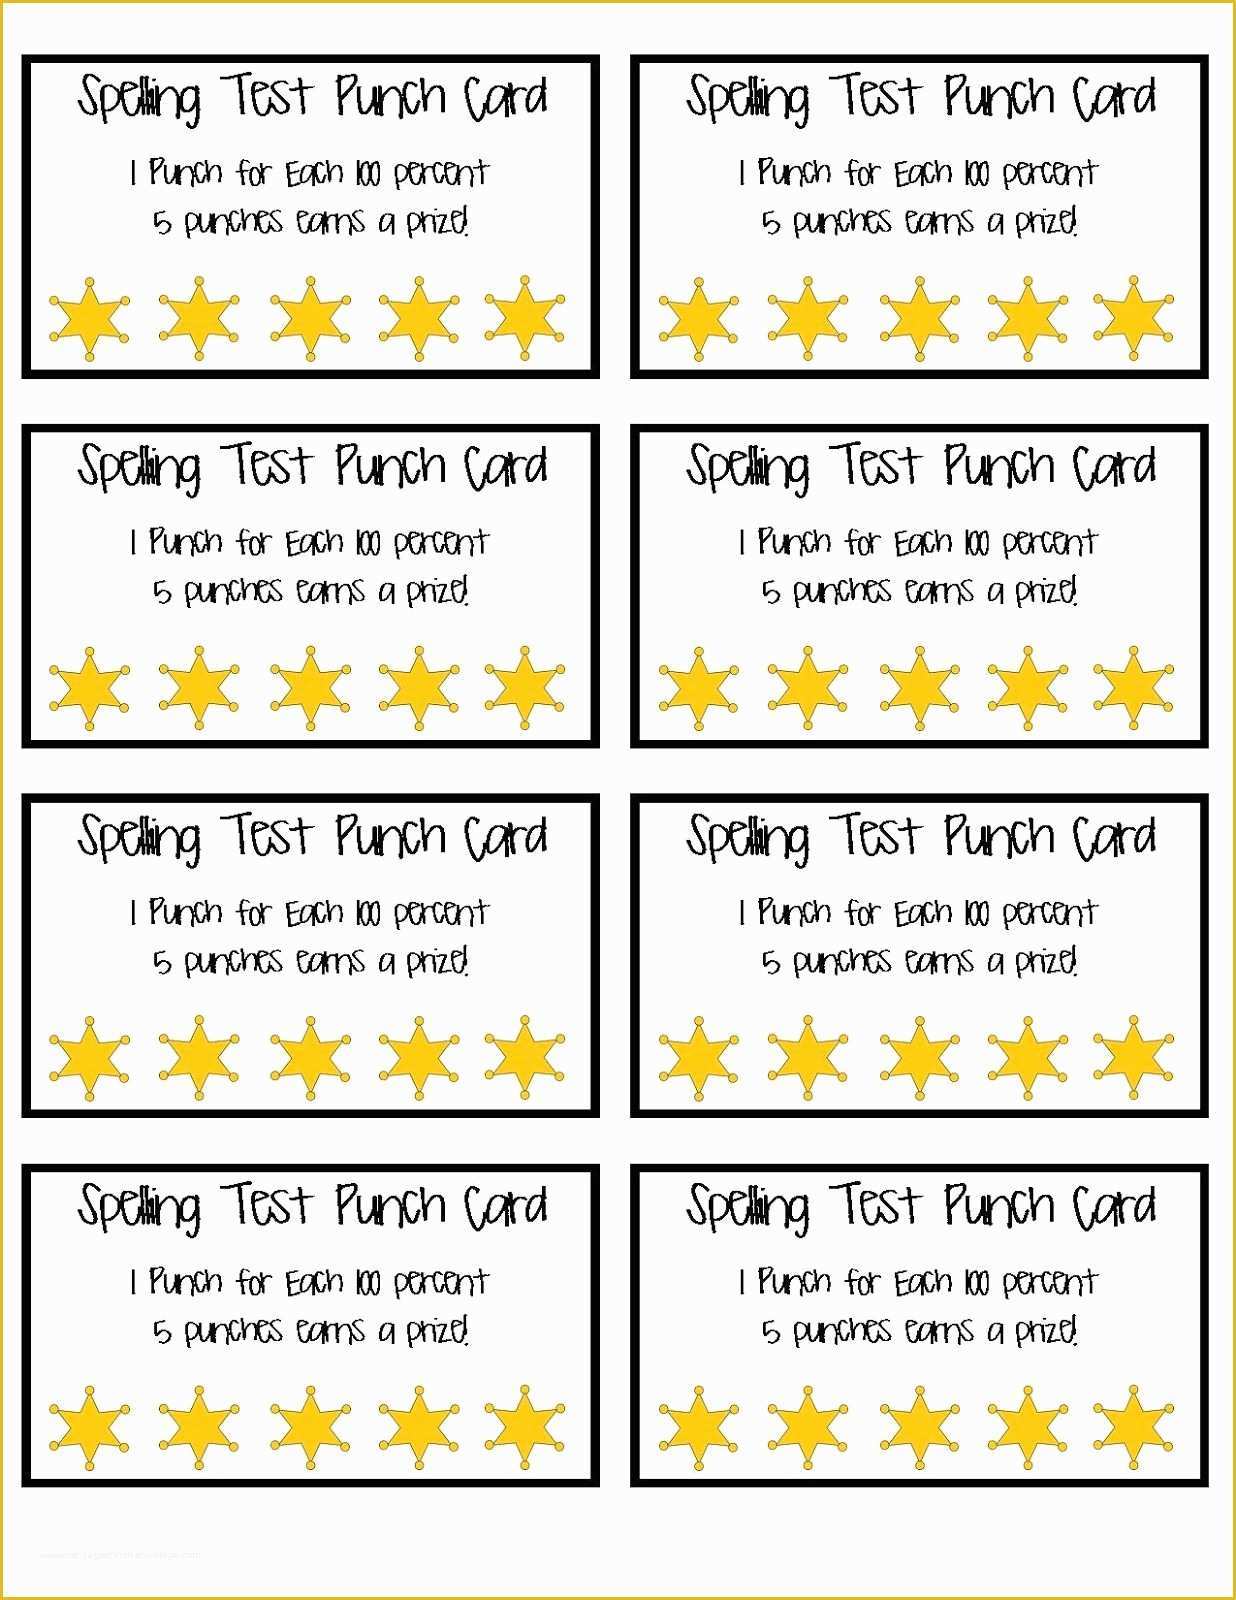 Printable Reward Punch Cards